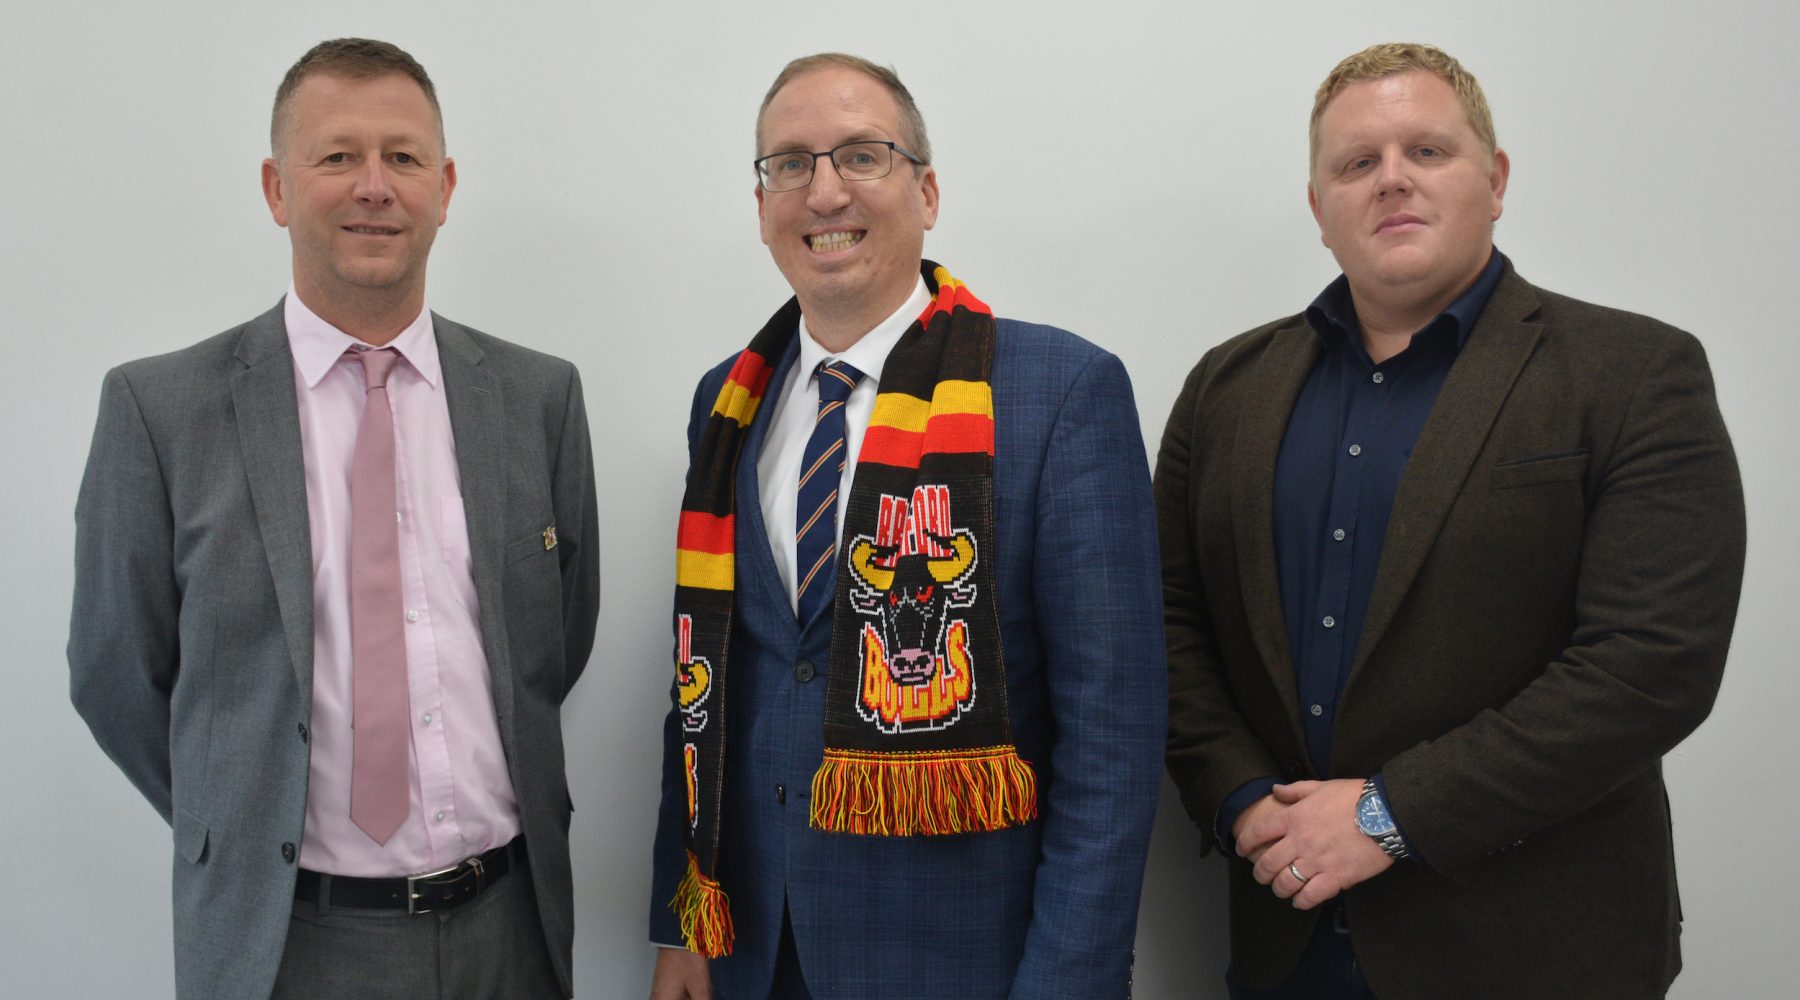 ﻿Bradford College Signs Educational Partnership with Bradford Bulls